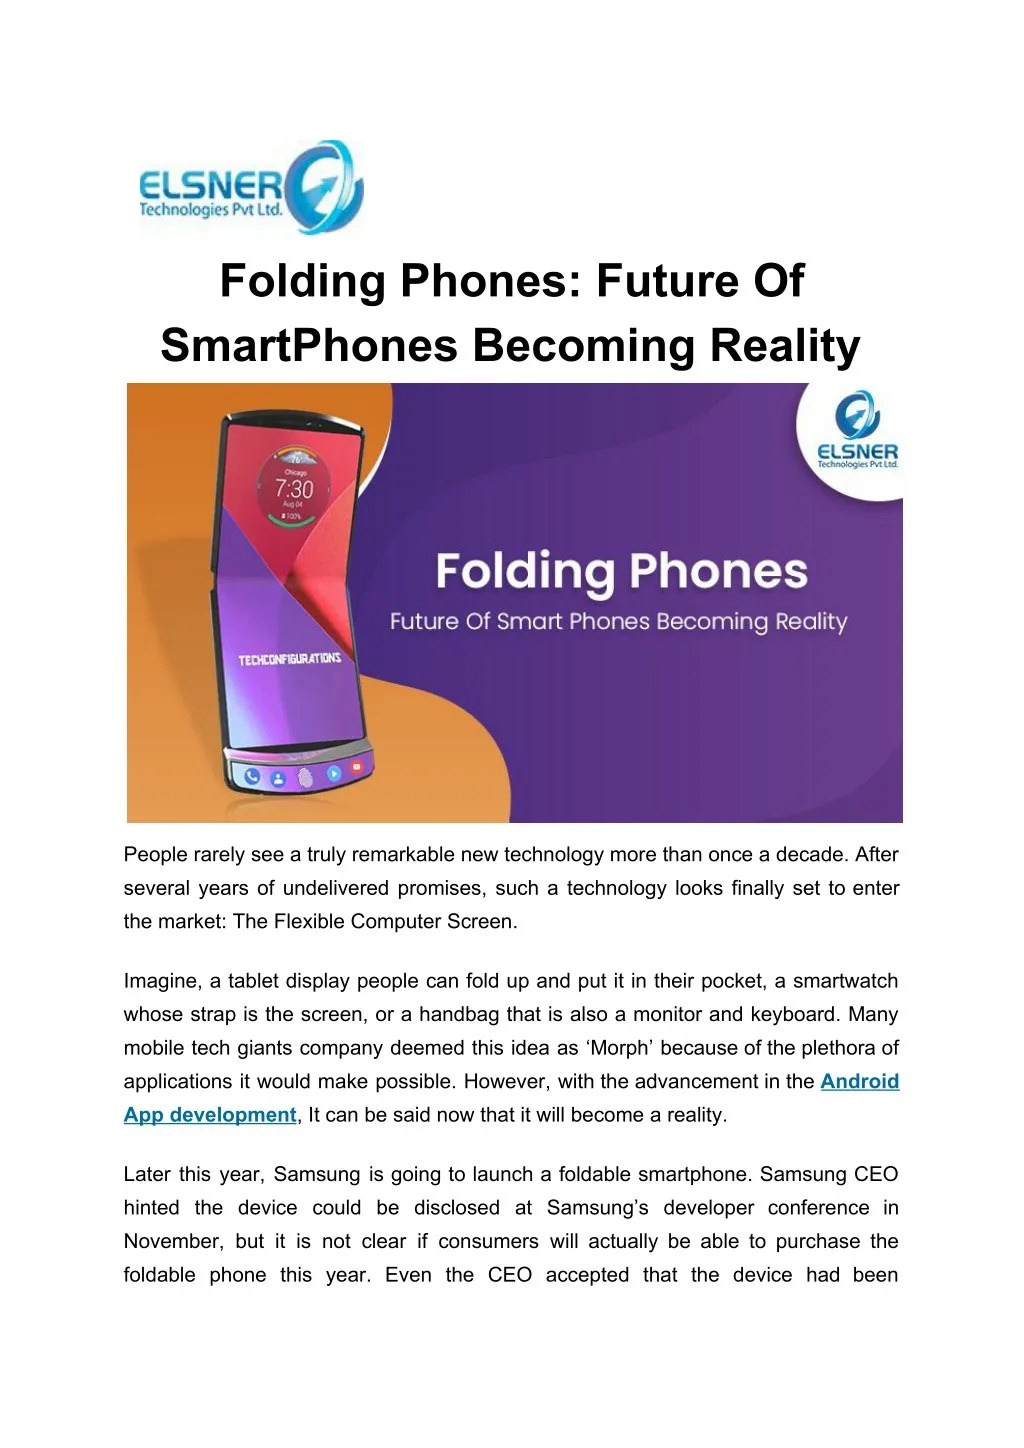 folding phones future of smartphones becoming